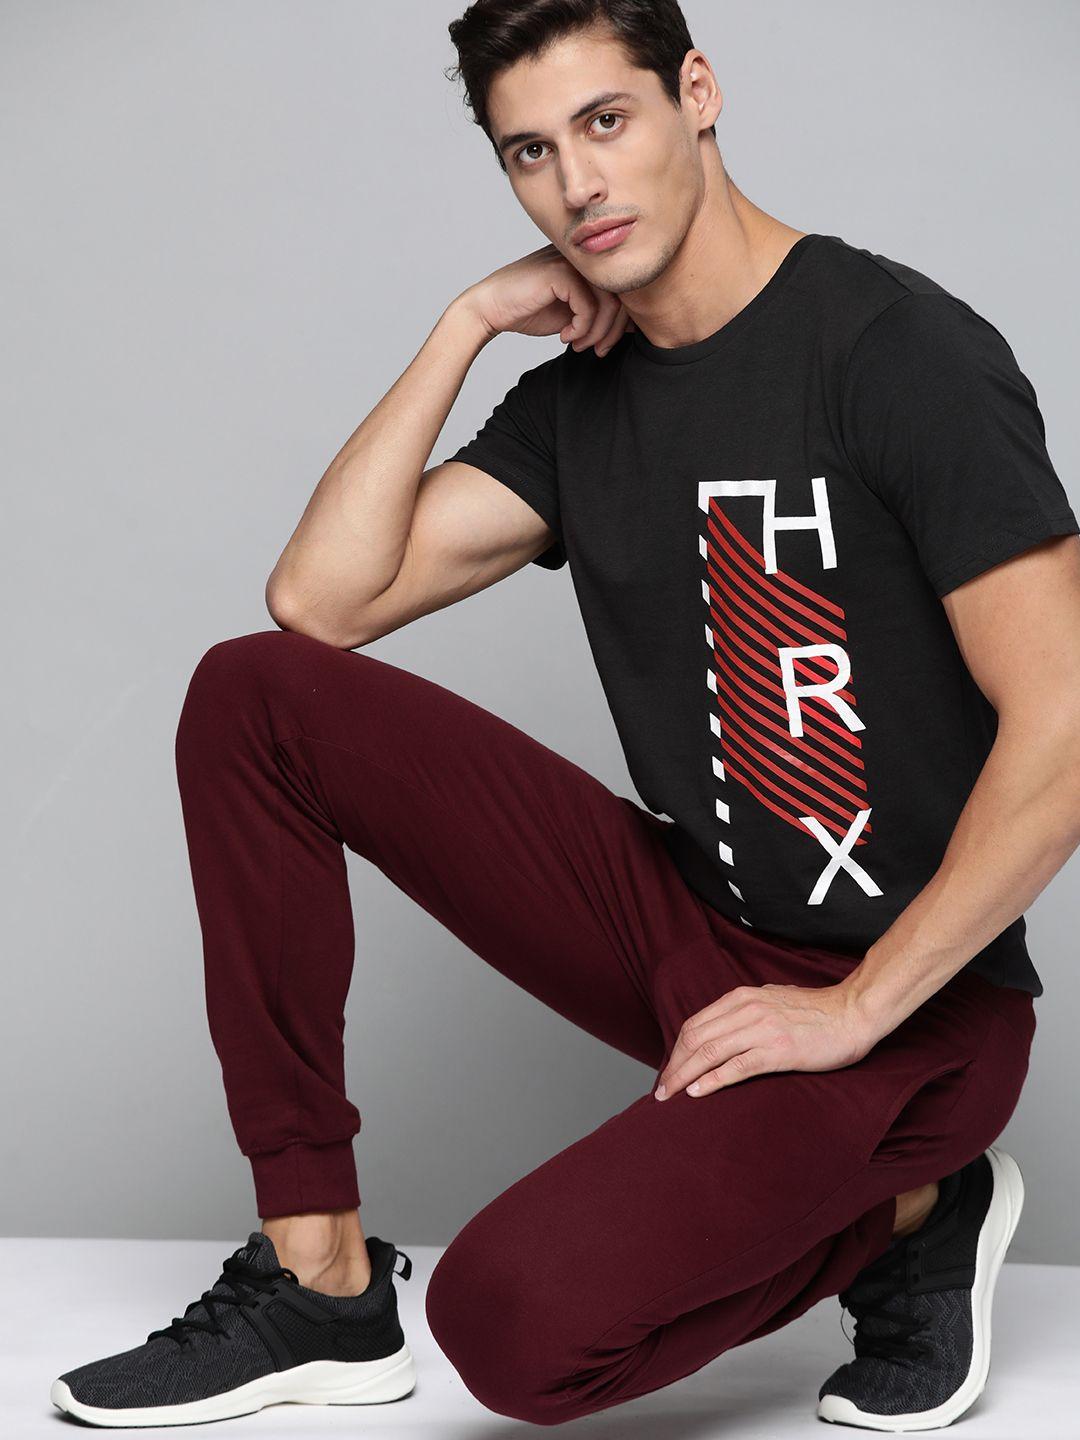 hrx by hrithik roshan lifestyle men jet black bio-wash brand carrier tshirt